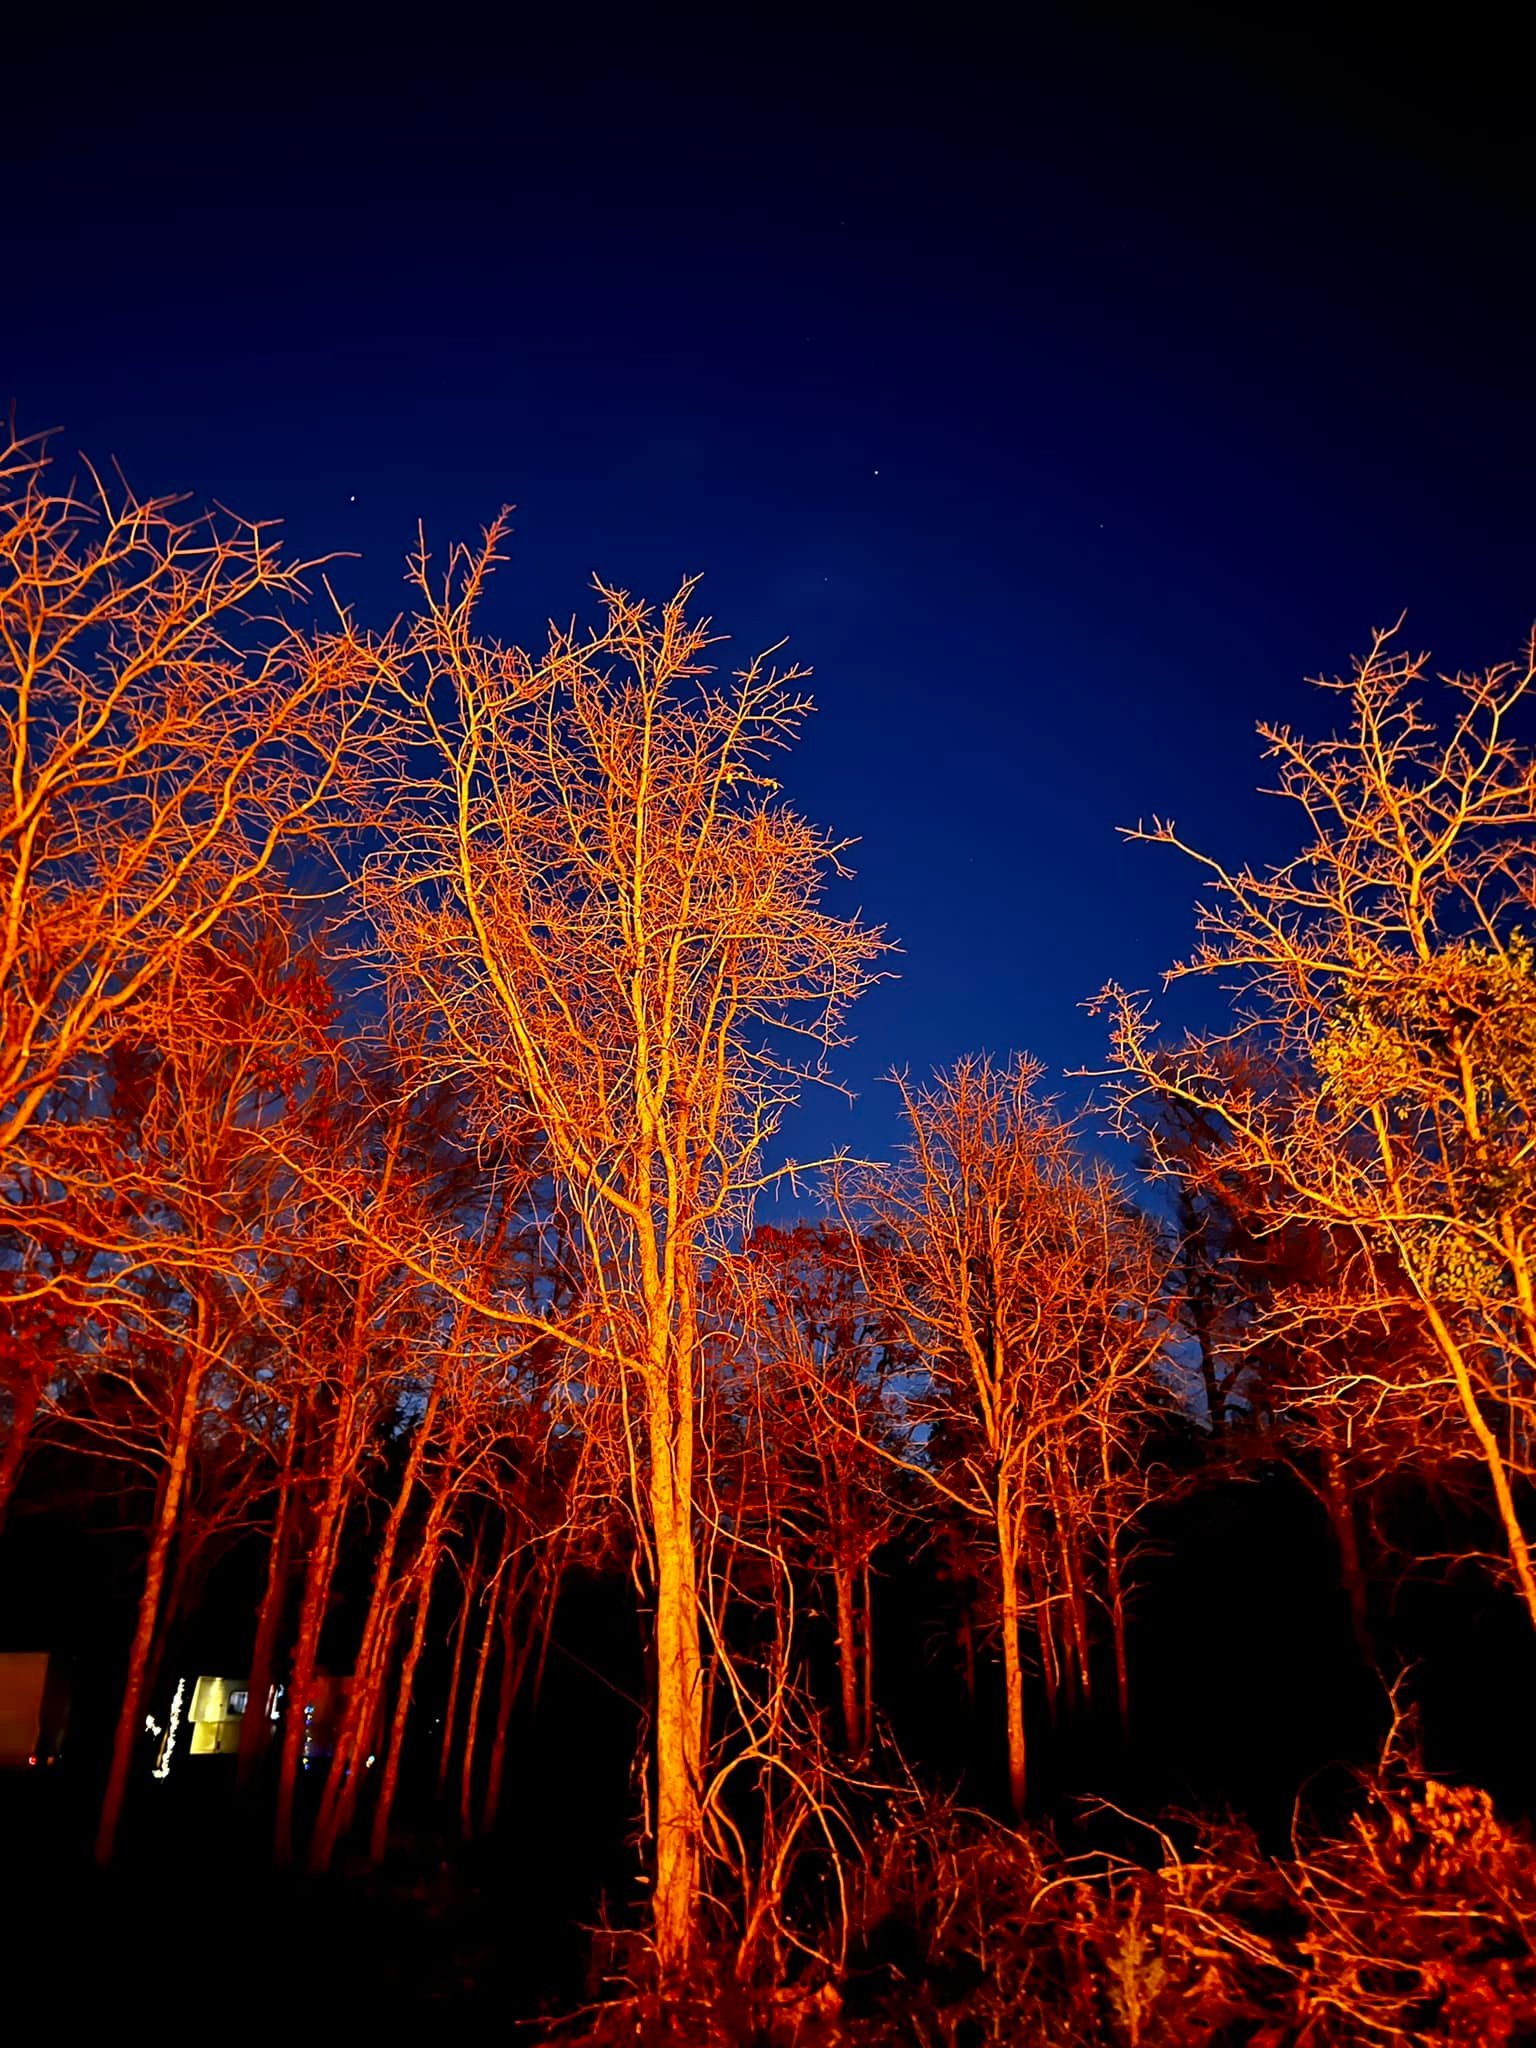 trees in firelight